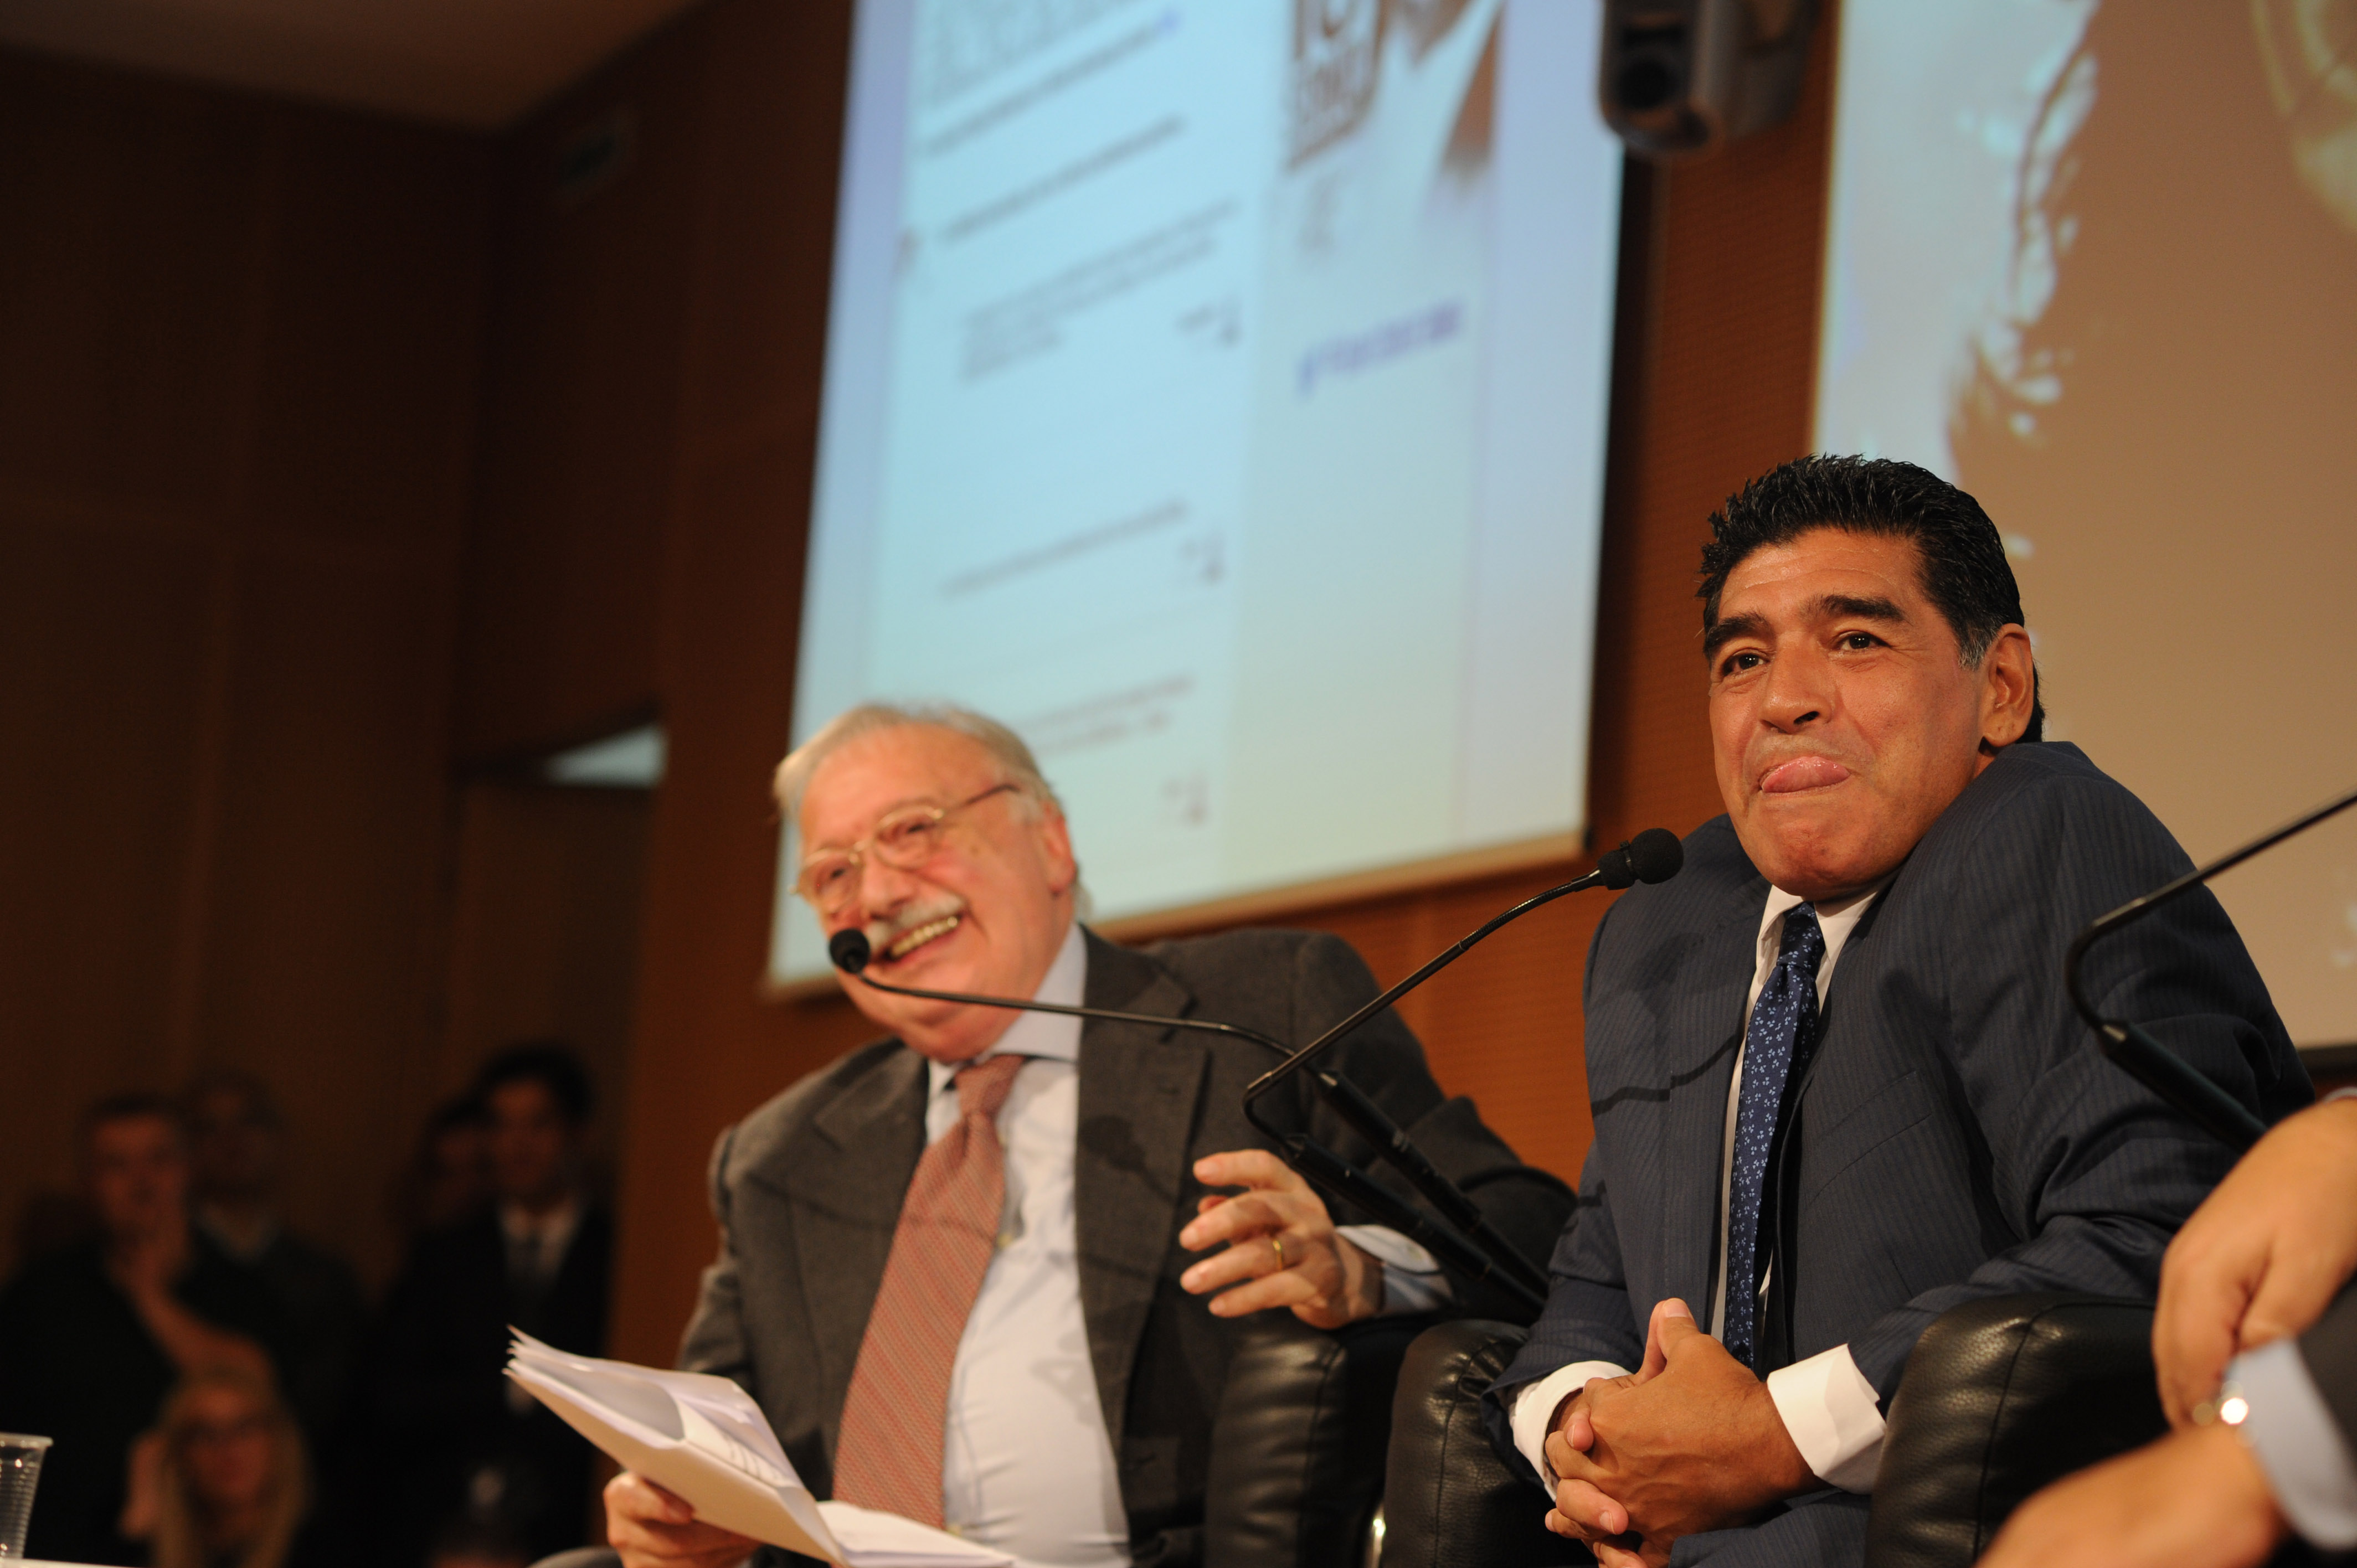 Gianni Mina and Diego Armando Maradona (Photo by Stefania D'Alessandro/Getty Images)